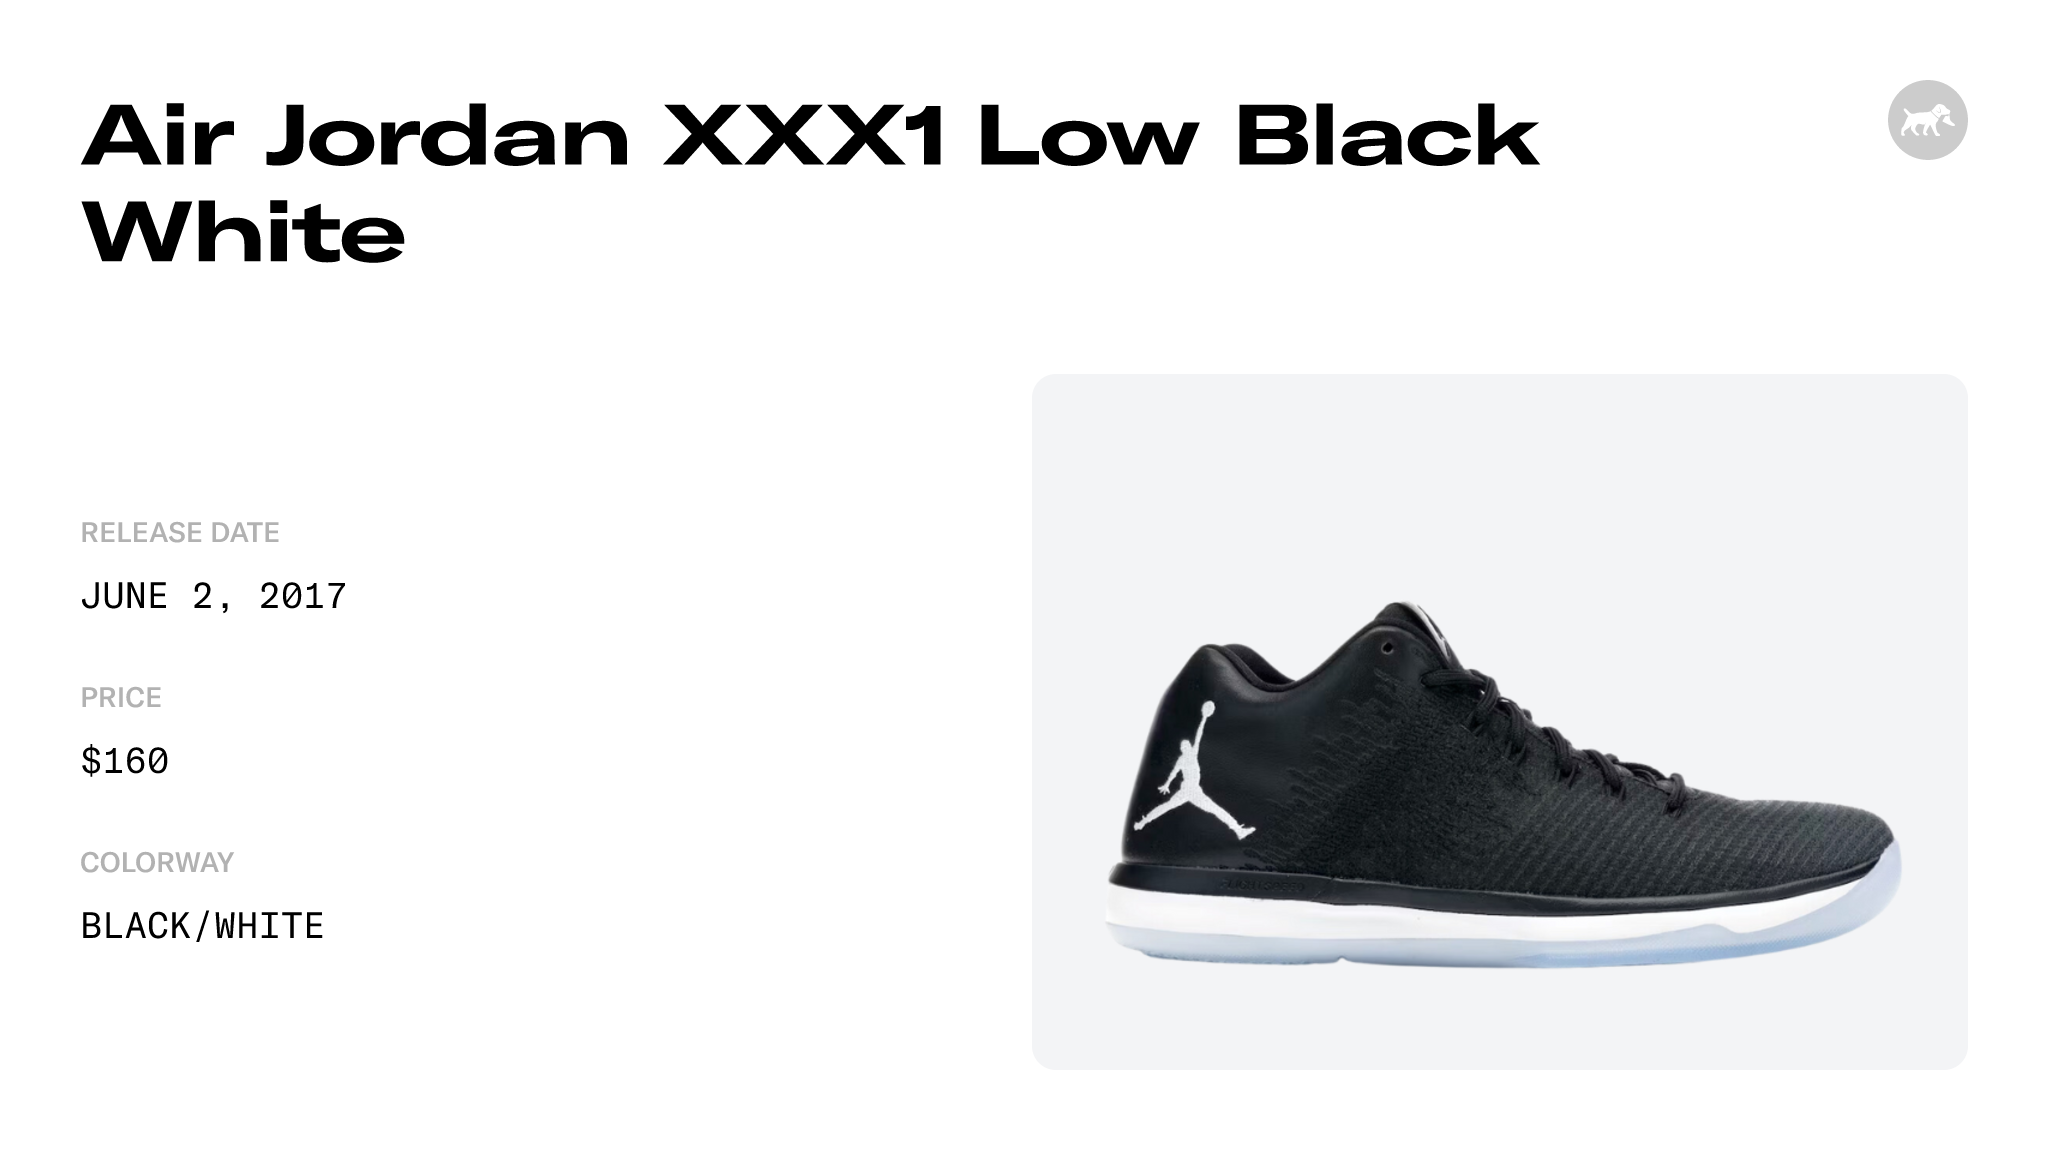 Air Jordan XXX1 Low Black White - 897564-002 Raffles and Release Date